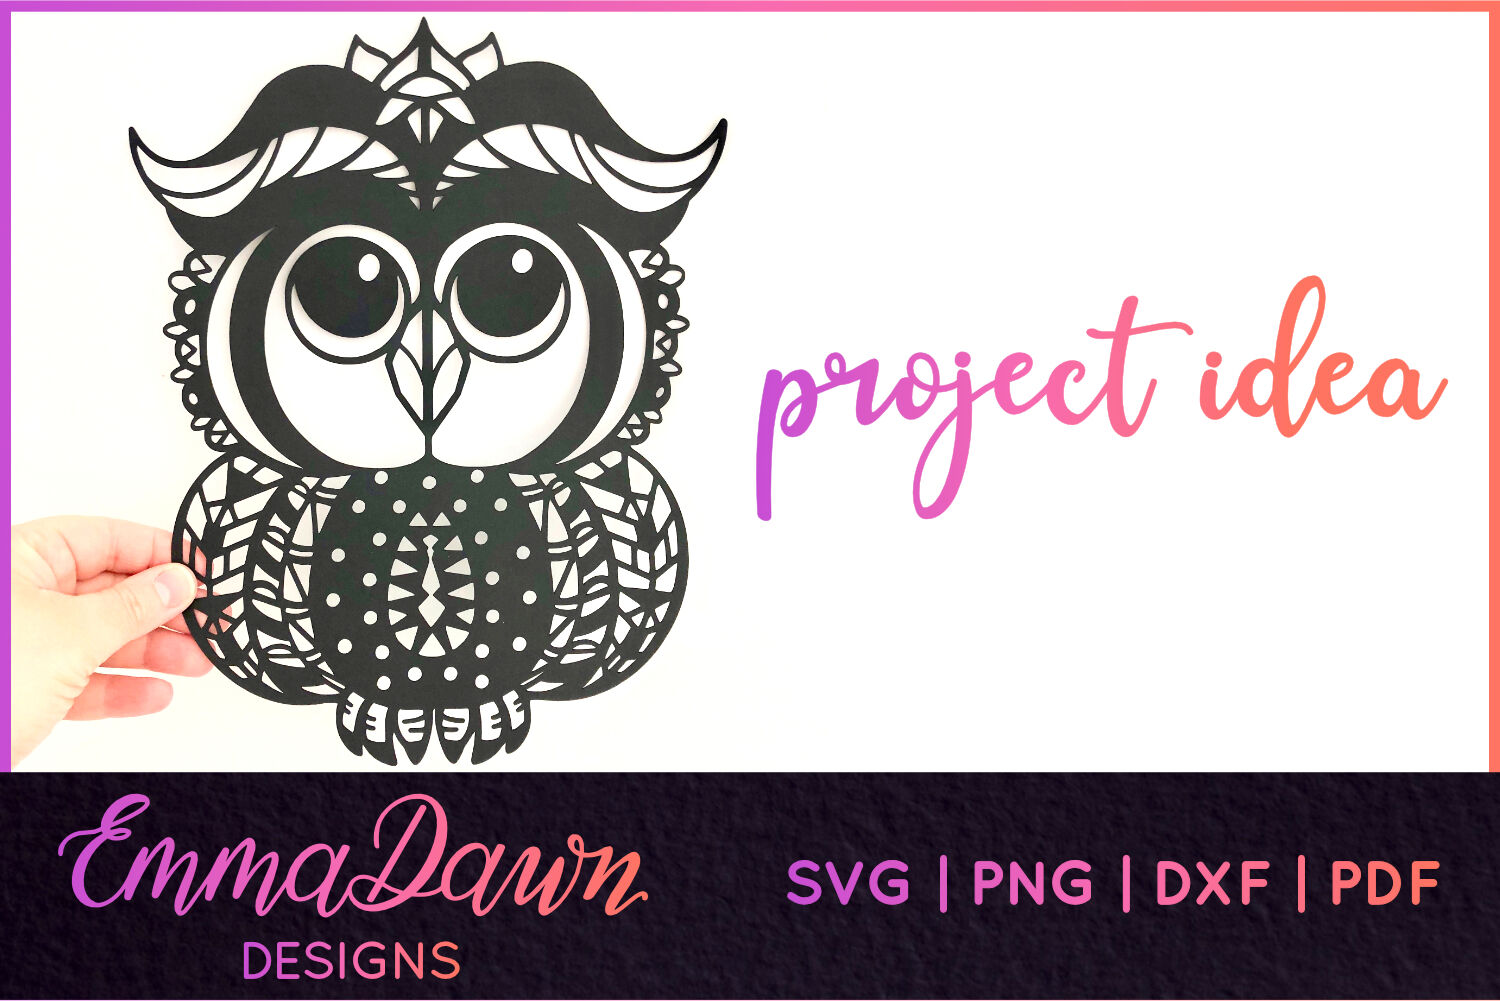 Download Felicity The Baby Owl Mandala Zentangle Design Svg By Emma Dawn Designs Thehungryjpeg Com